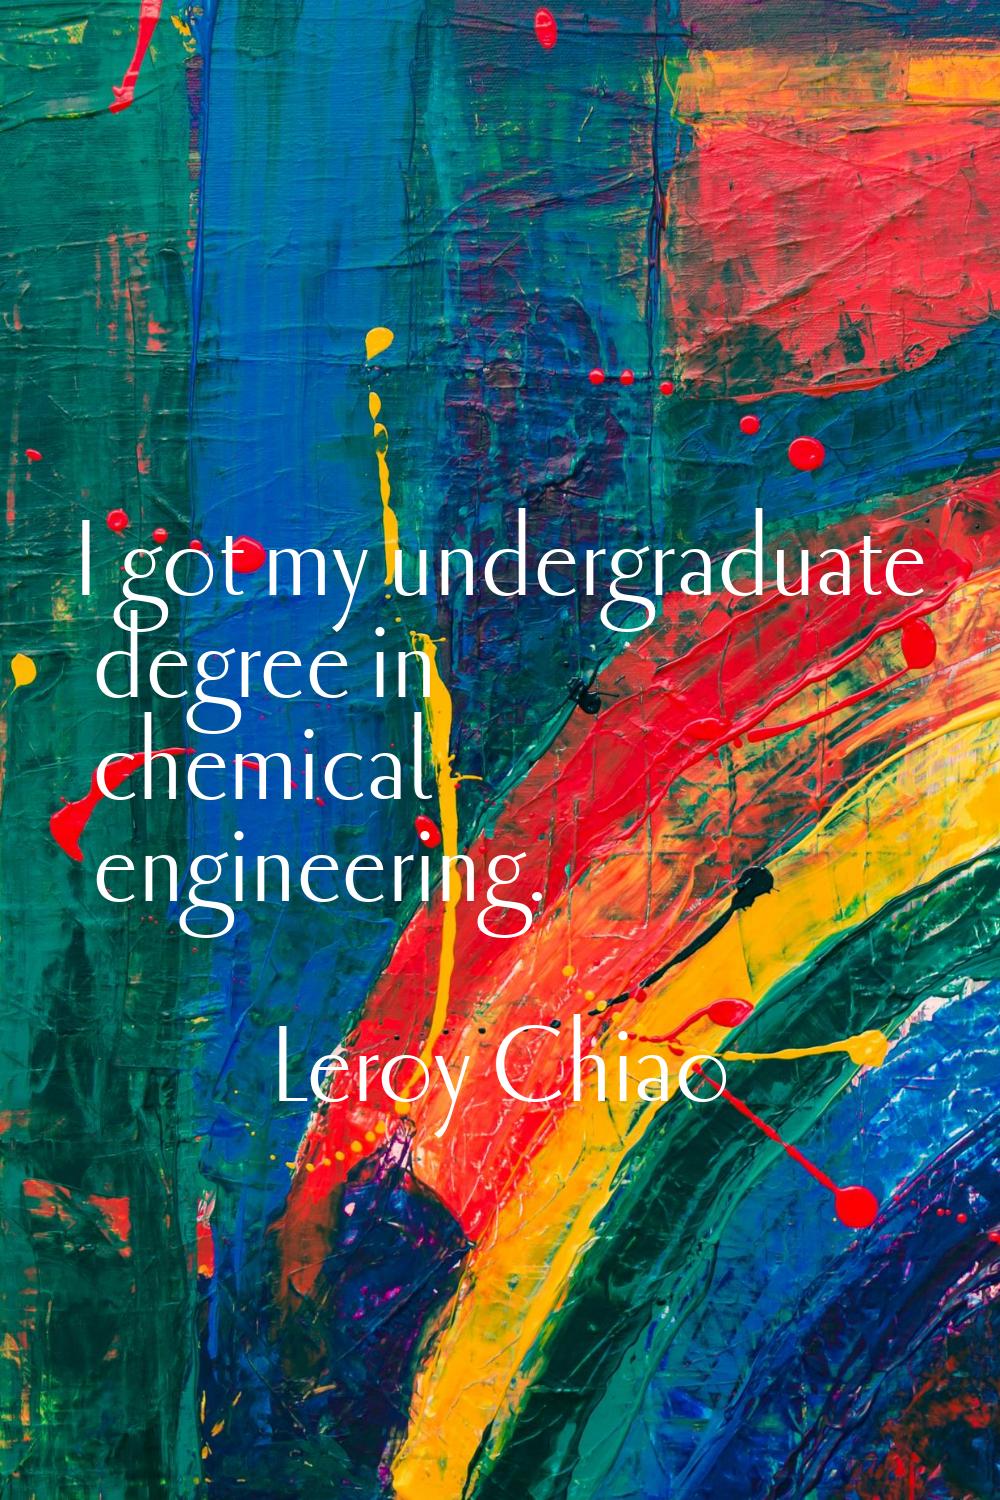 I got my undergraduate degree in chemical engineering.